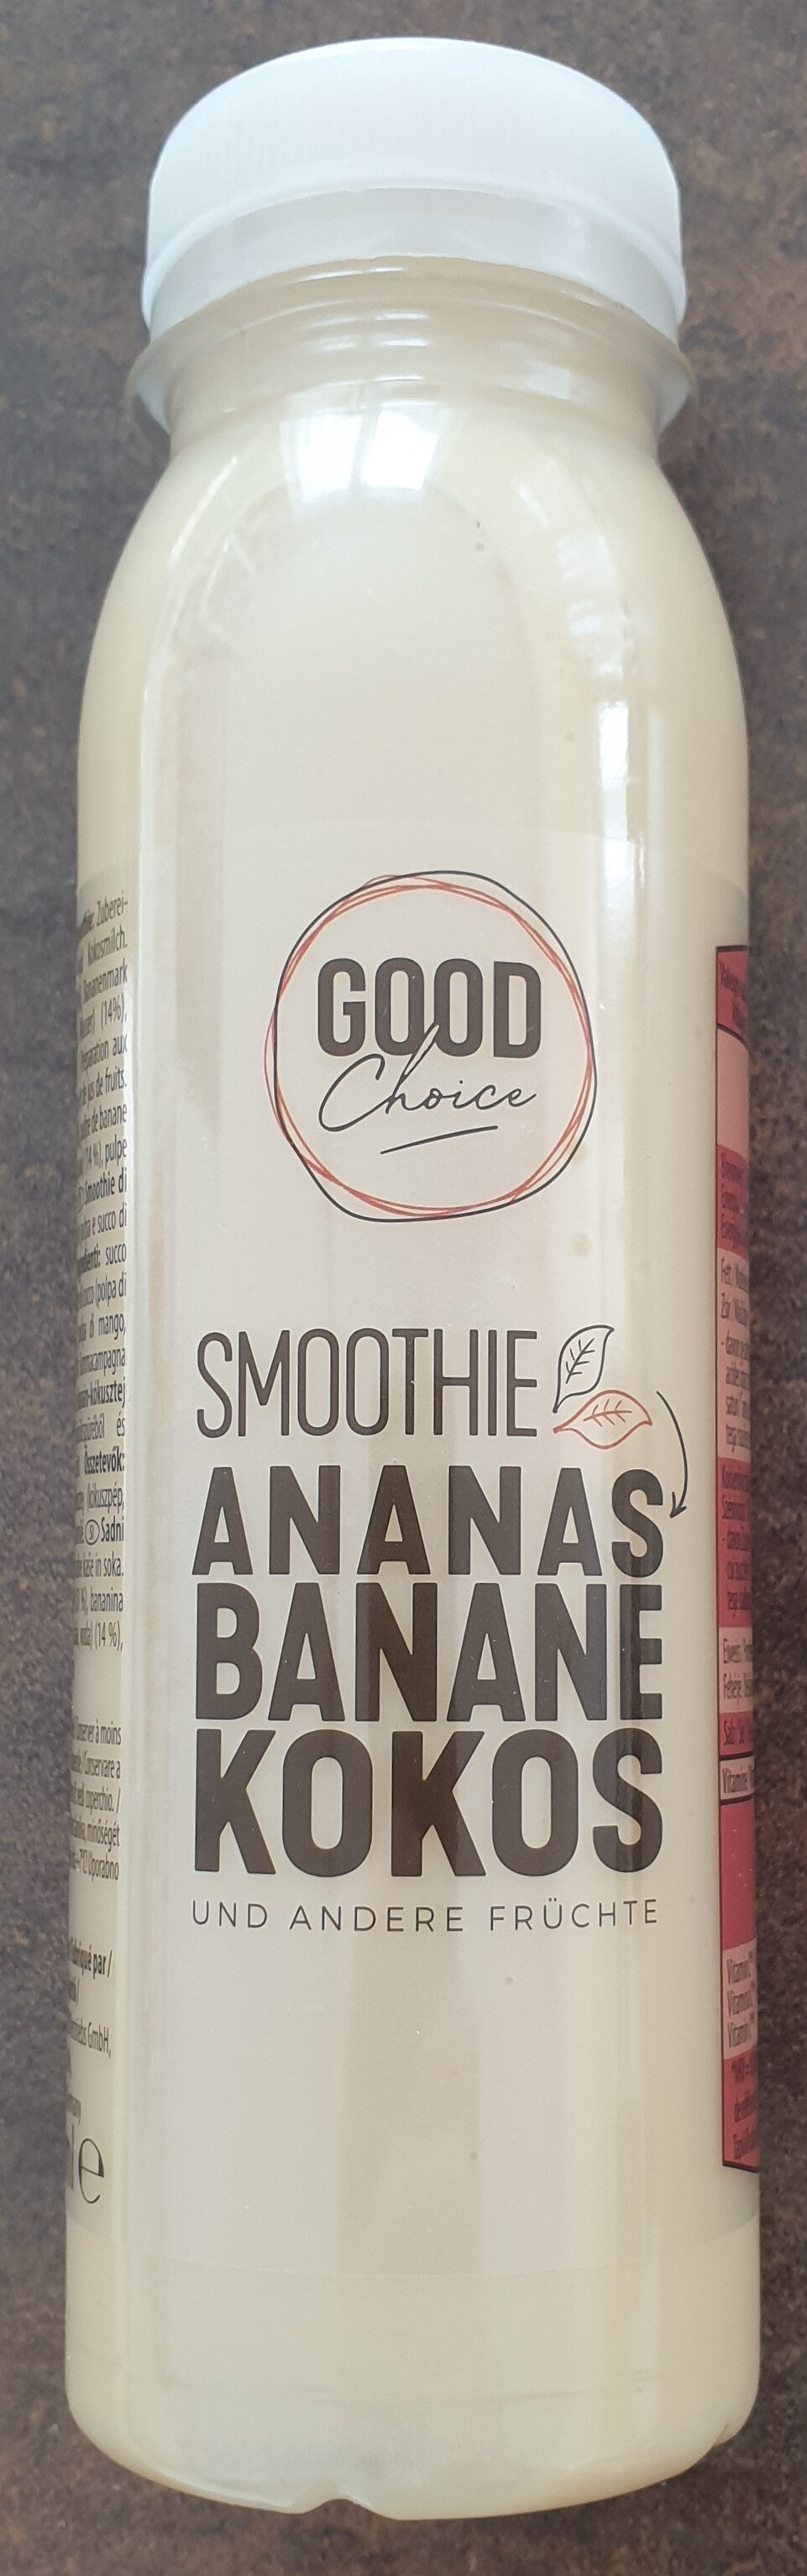 Smoothie Ananas Banane Kokos - Produkt